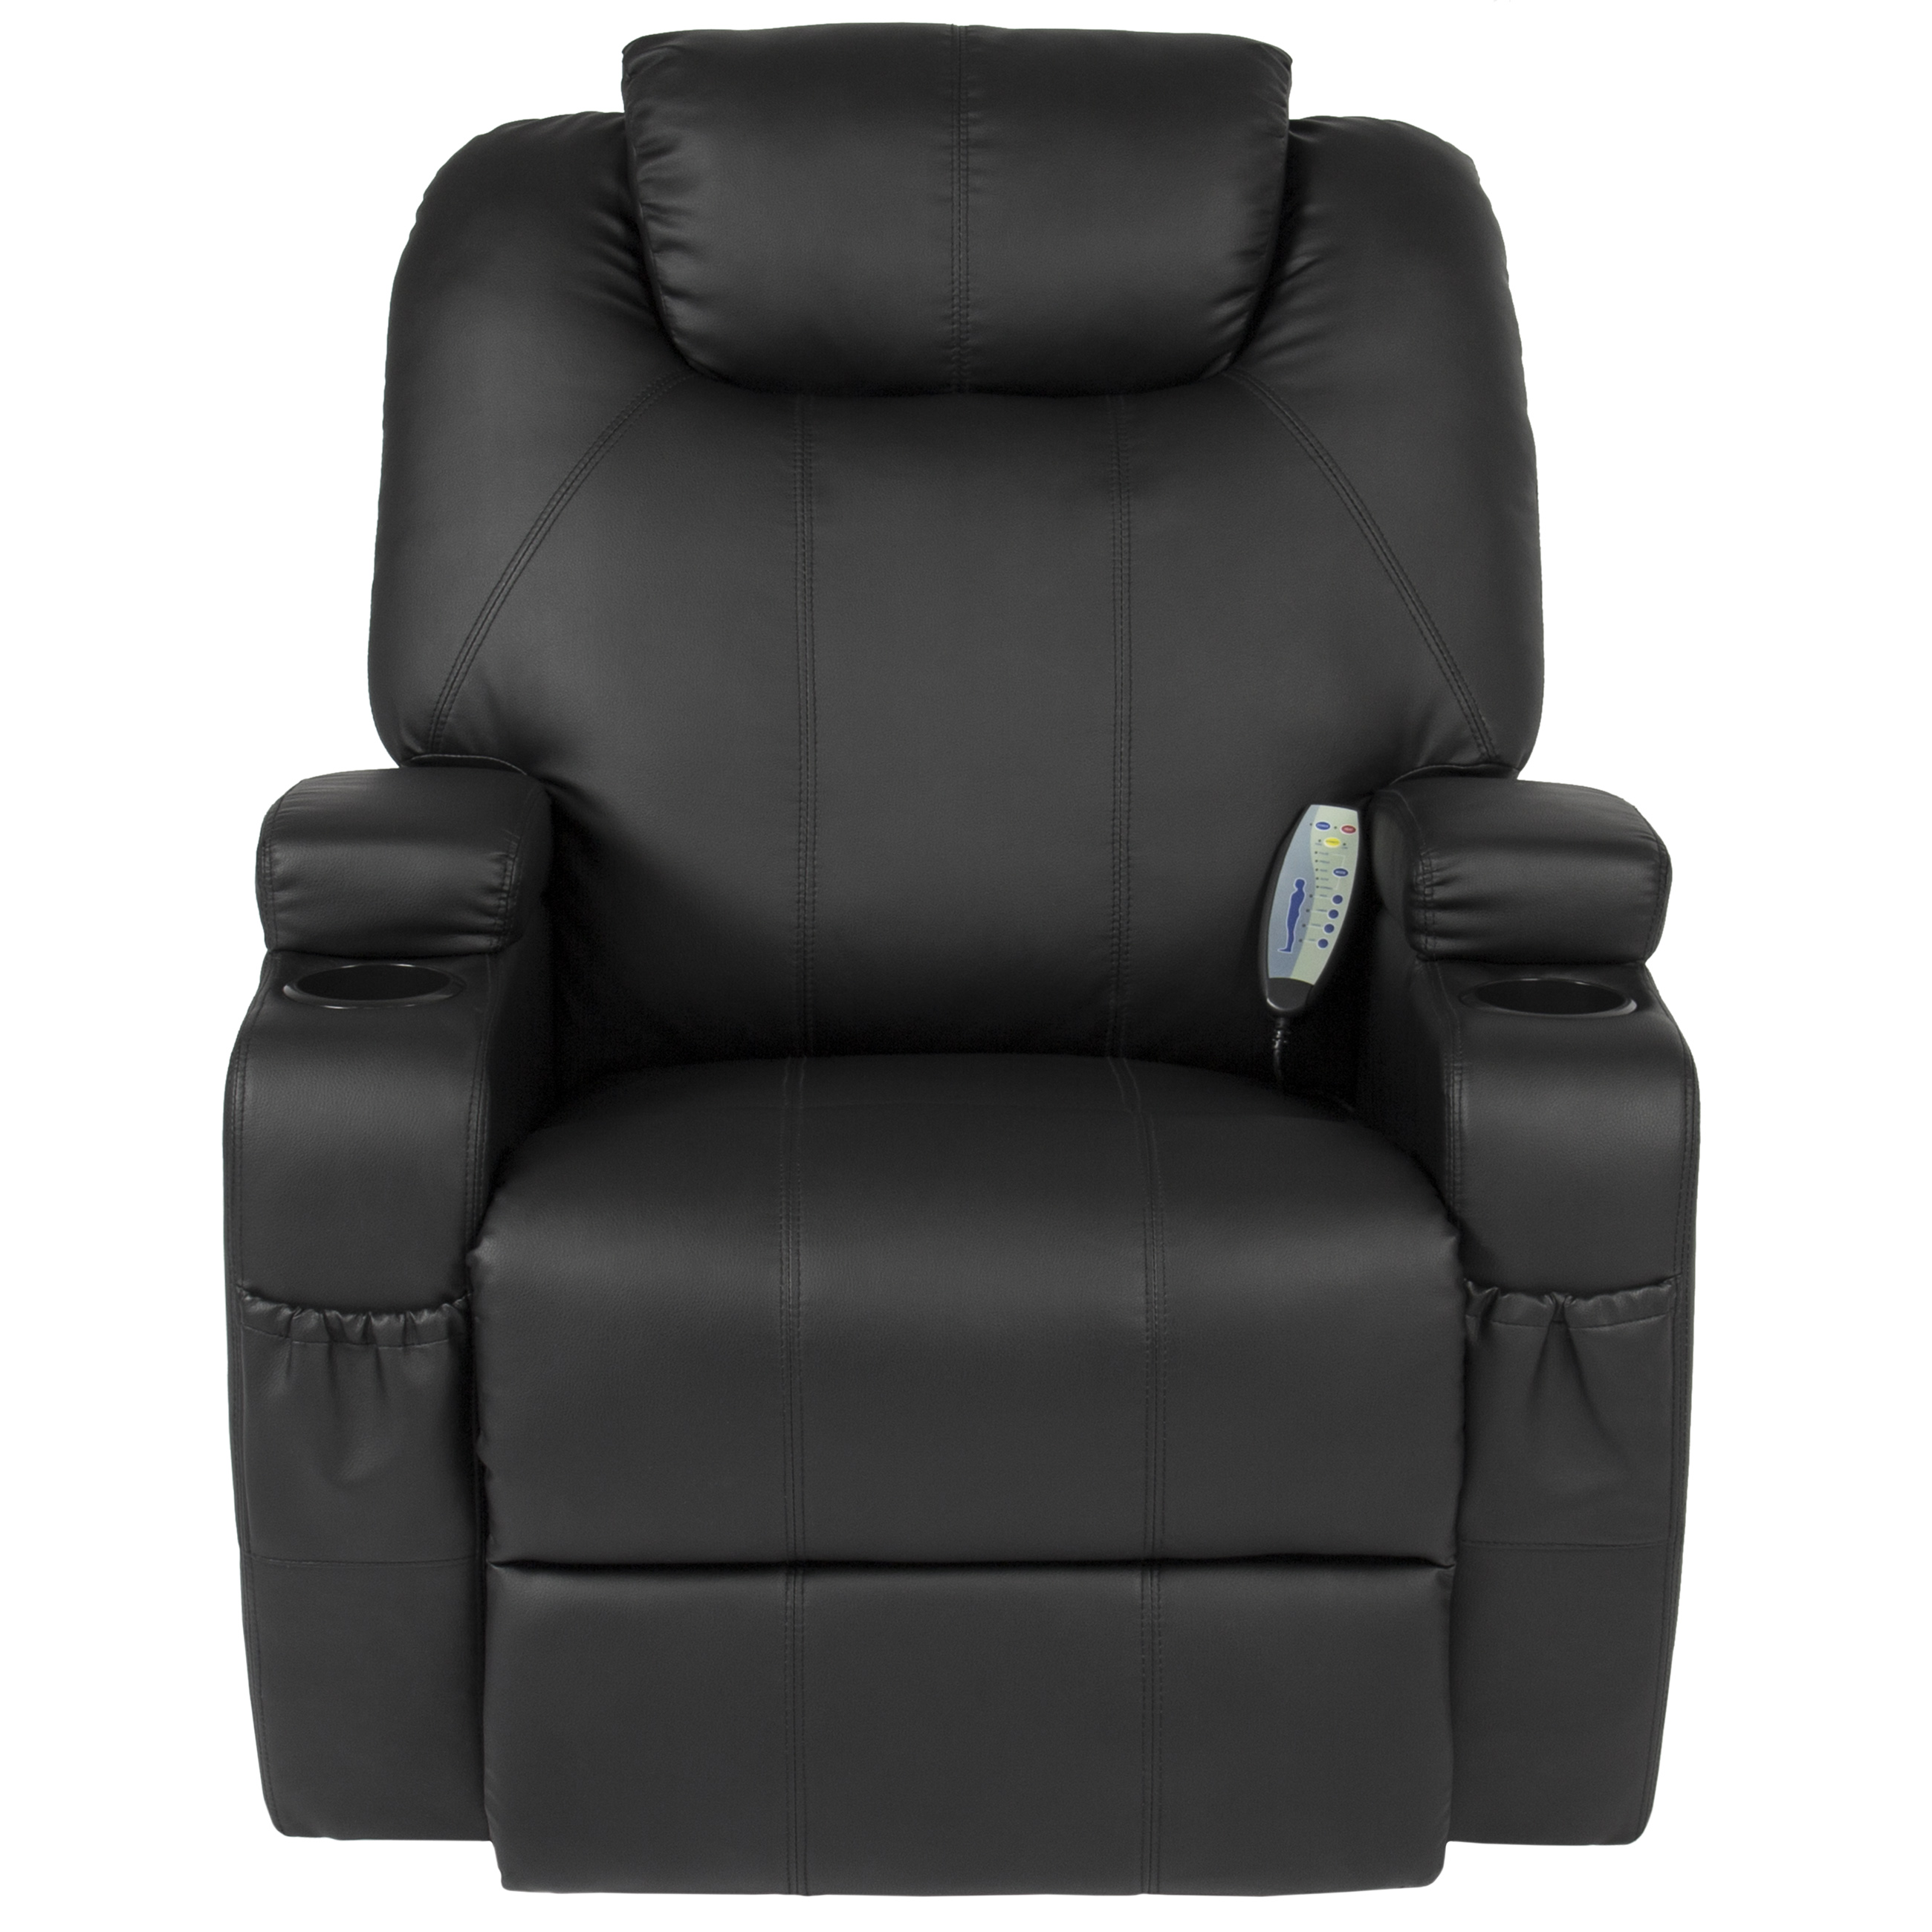 Bcp Swivel Massage Recliner Chair W Remote Control 5 Modes Ebay